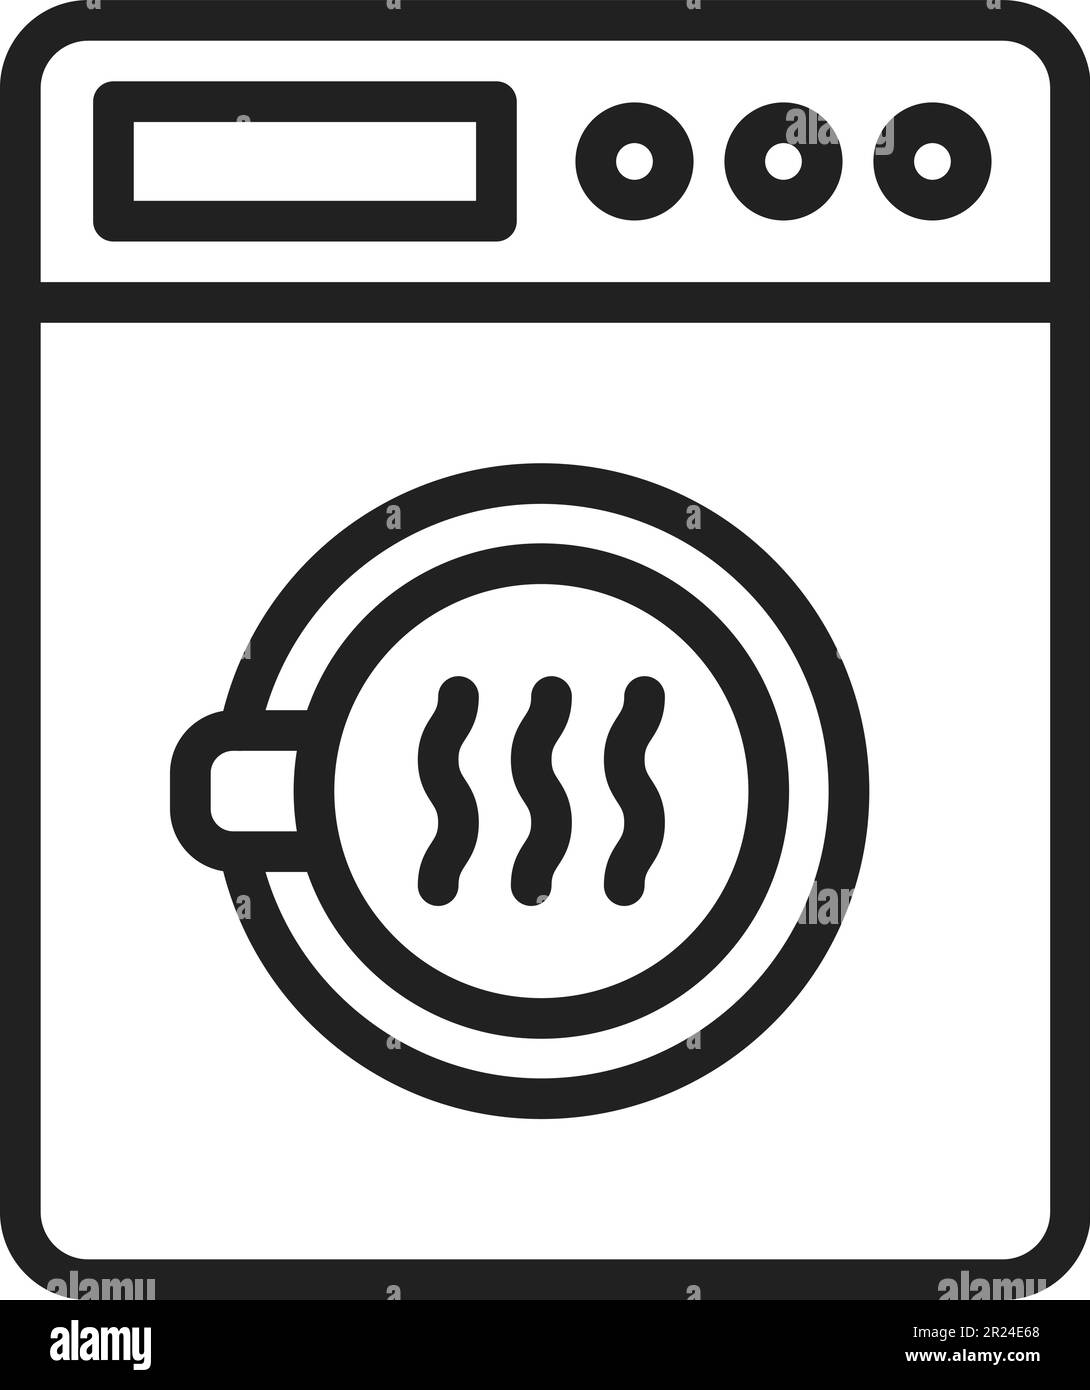 Dryer icon vector image. Stock Vector